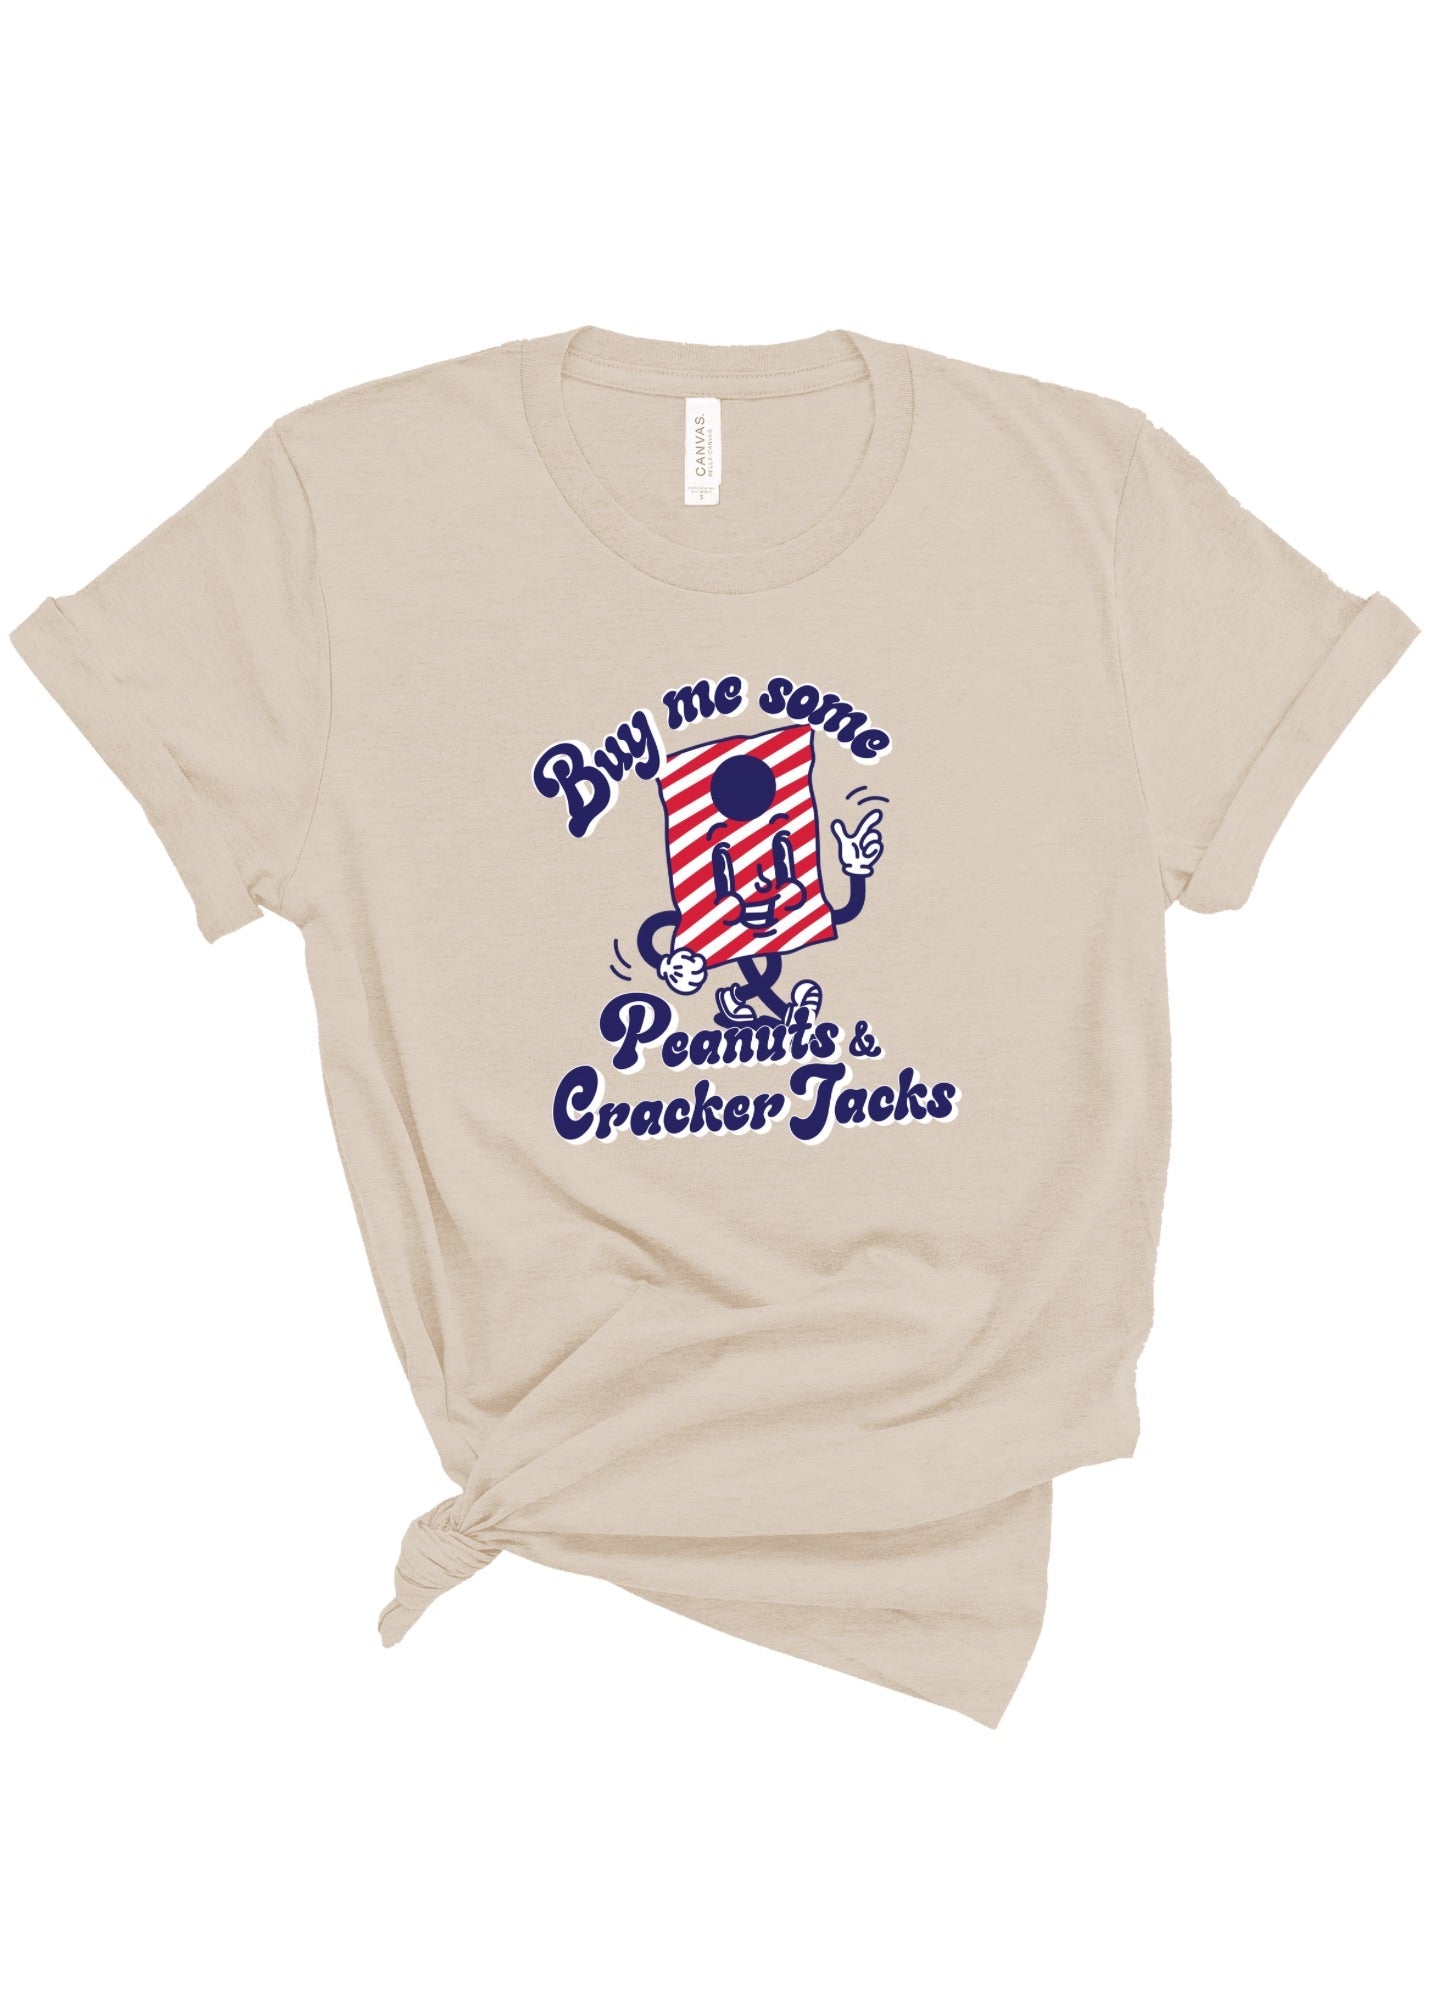 Peanuts + Cracker Jacks | Adult Tee | RTS-Sister Shirts-Sister Shirts, Cute & Custom Tees for Mama & Littles in Trussville, Alabama.